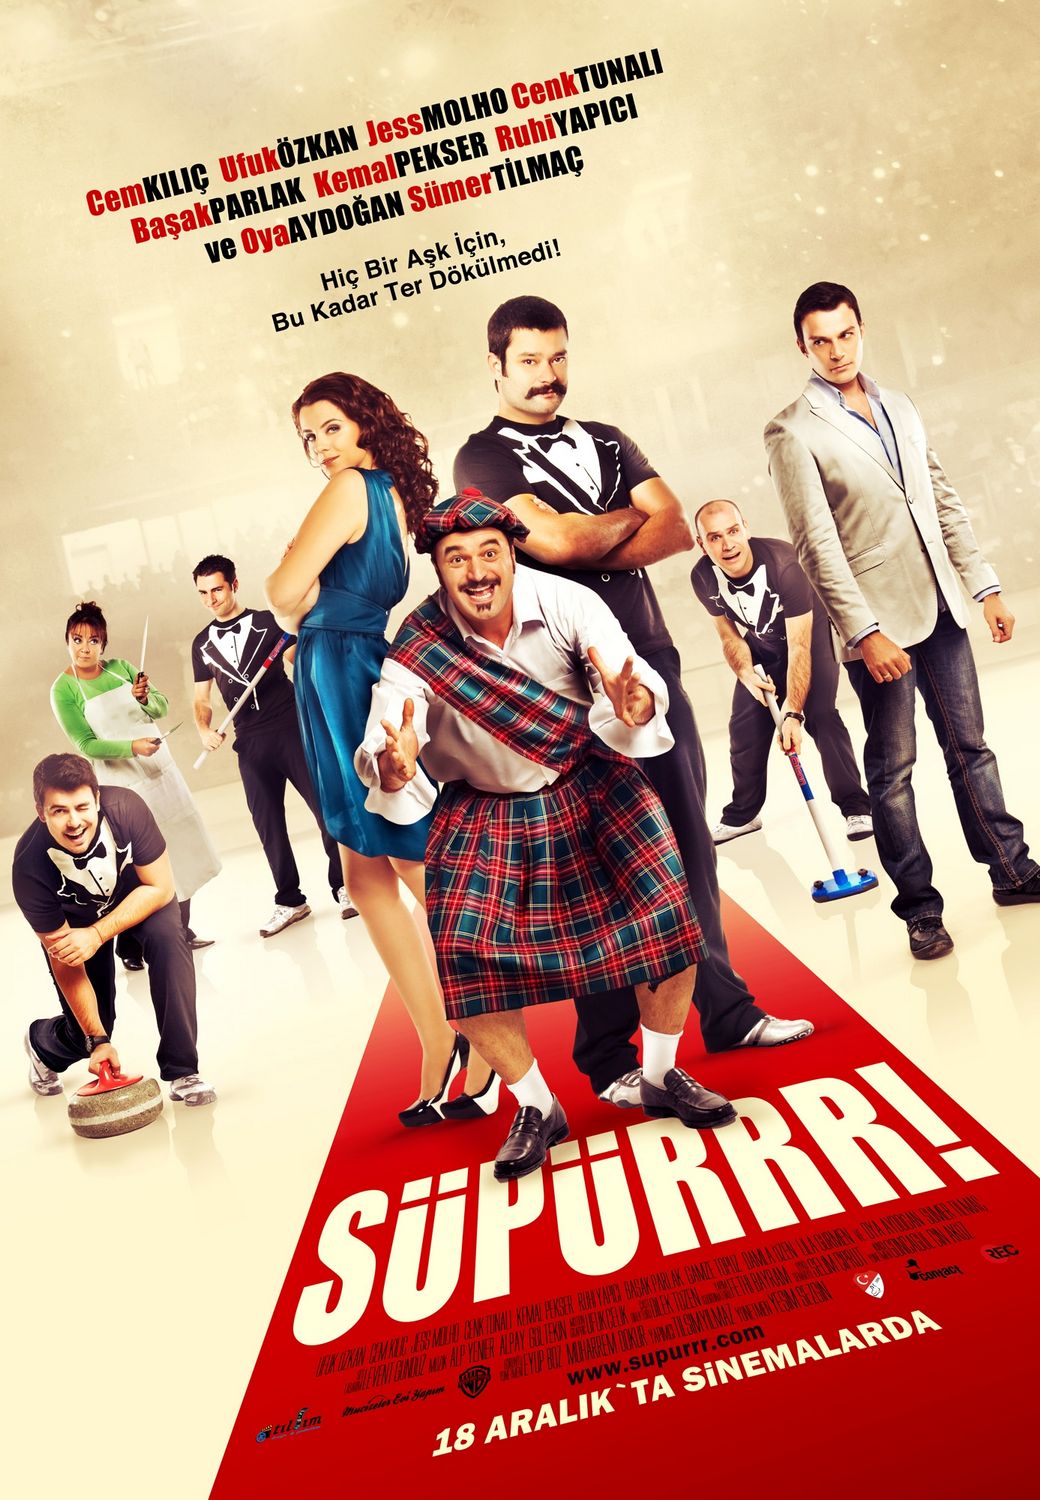 Extra Large Movie Poster Image for Süpürrr! 